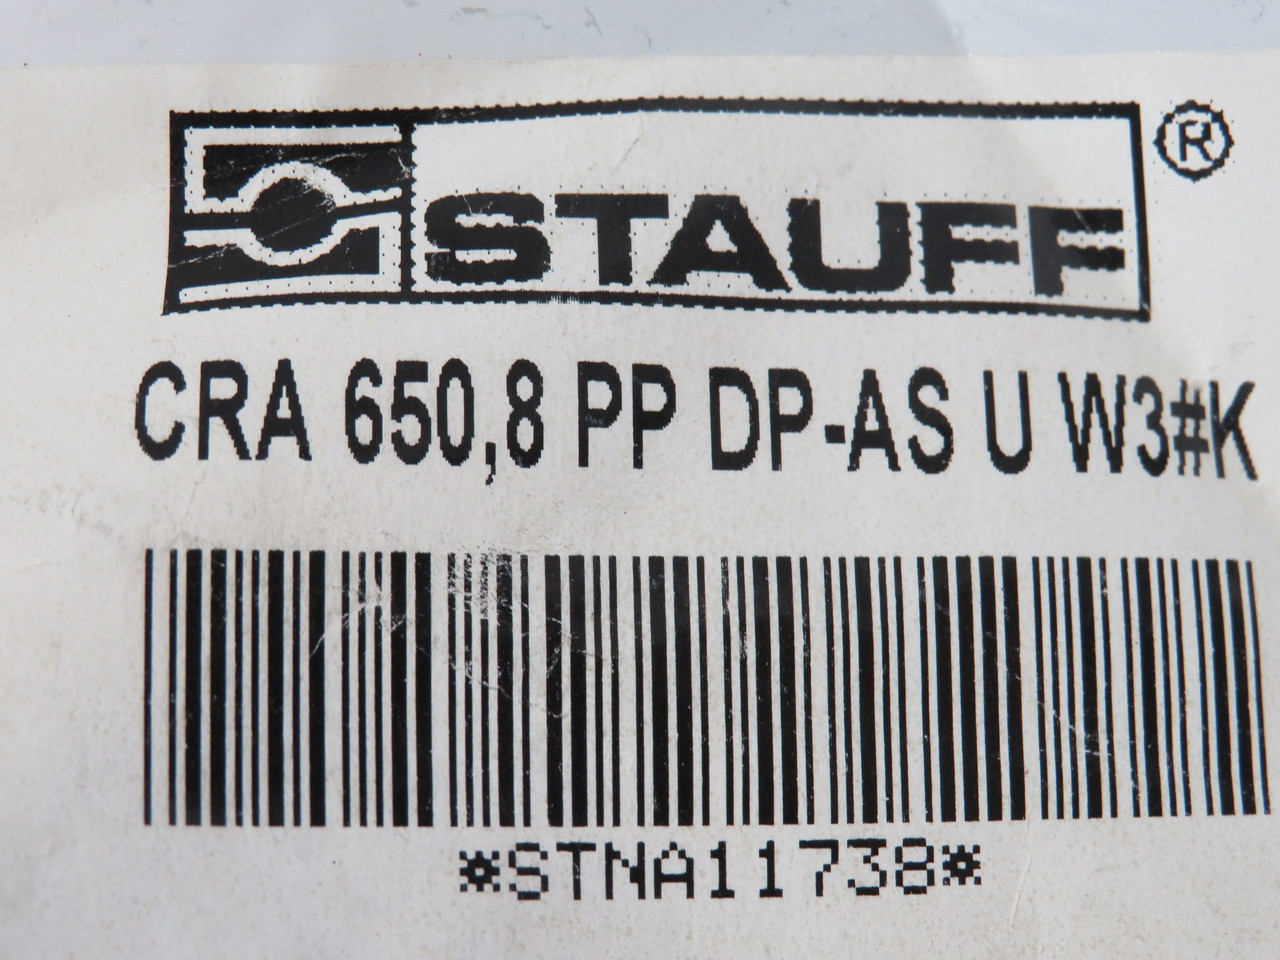 Stauff CRA-650-8PP-DP-AS-U-W3#K Polypropylene Profiled Clamp Size6 50.8mmDIA NWB